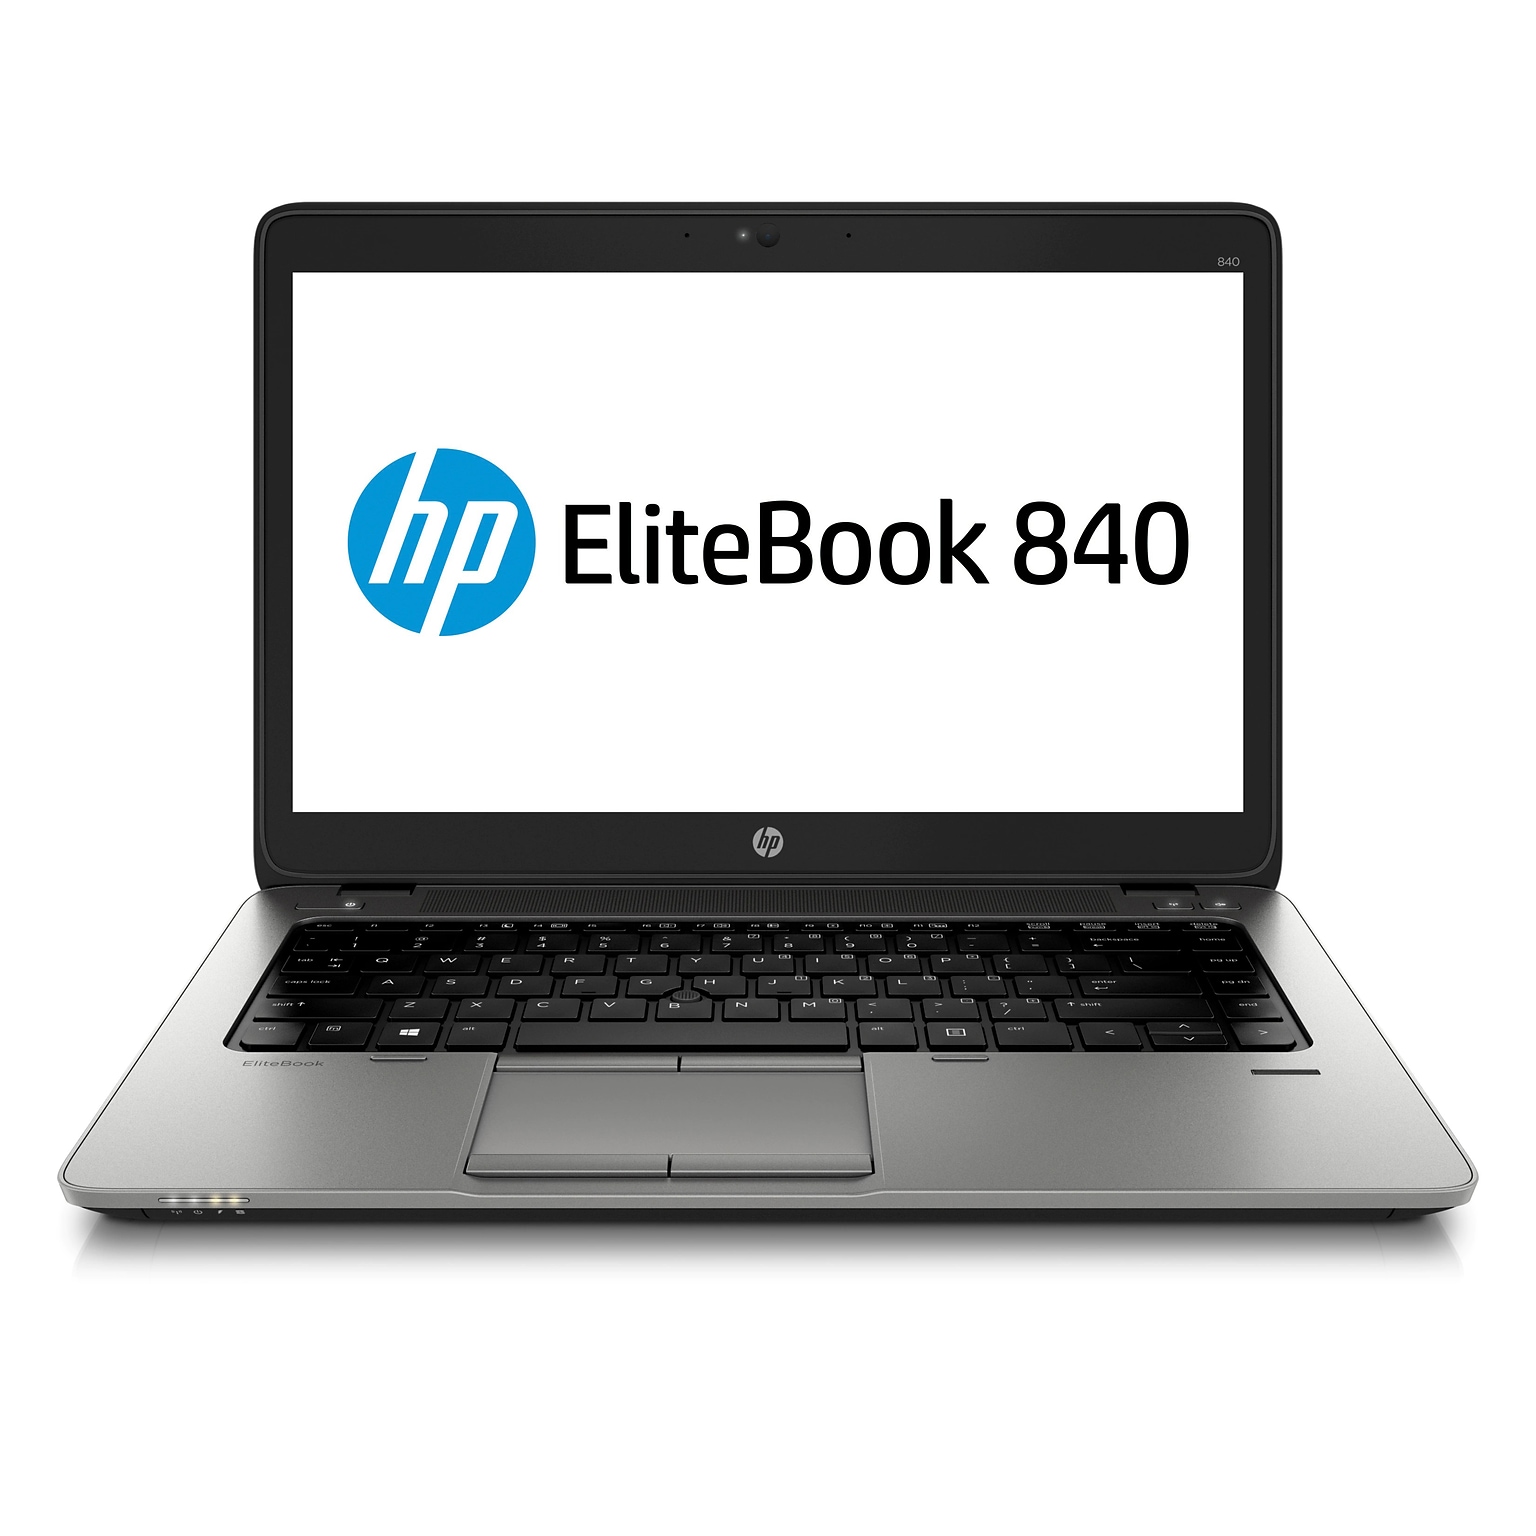 HP EliteBook 840 G2 14 Refurbished Laptop, Intel i5, 8GB Memory, 256GB SSD, Windows 10 Pro (L3Z76UT)